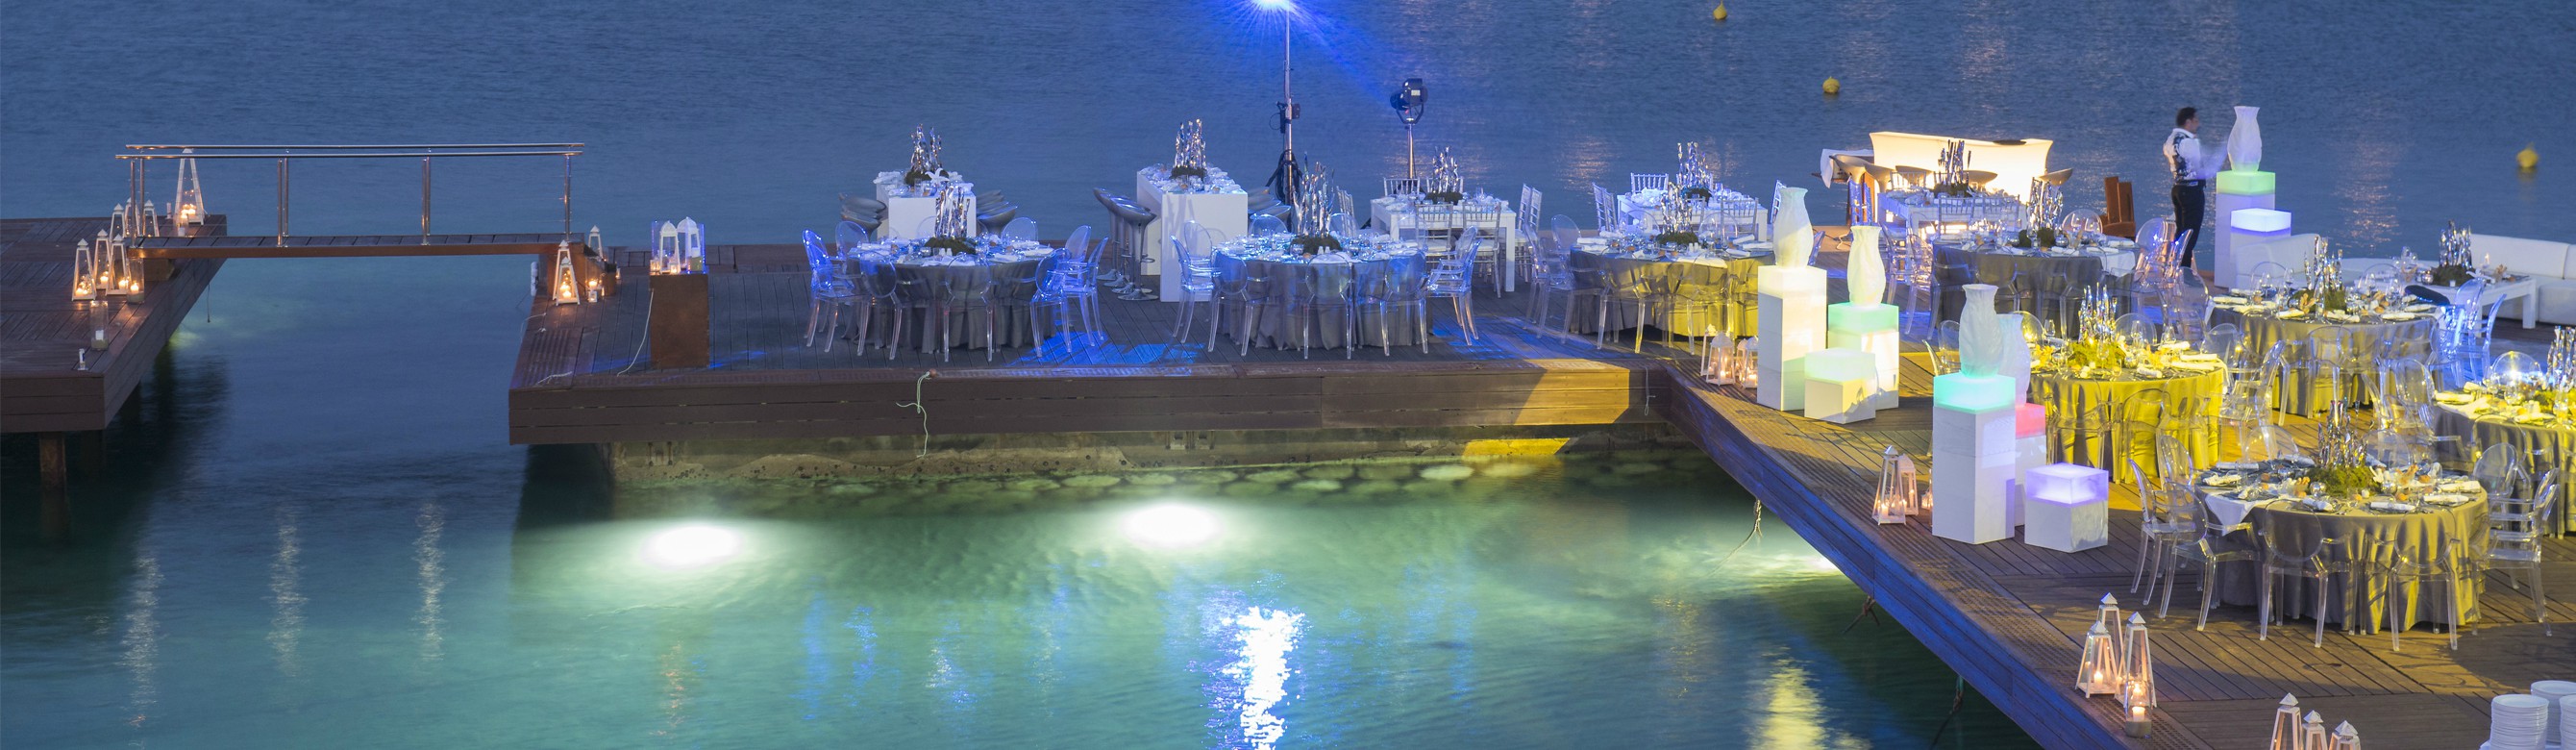 Book your wedding day in Elounda Bay Palace Hotel Crete